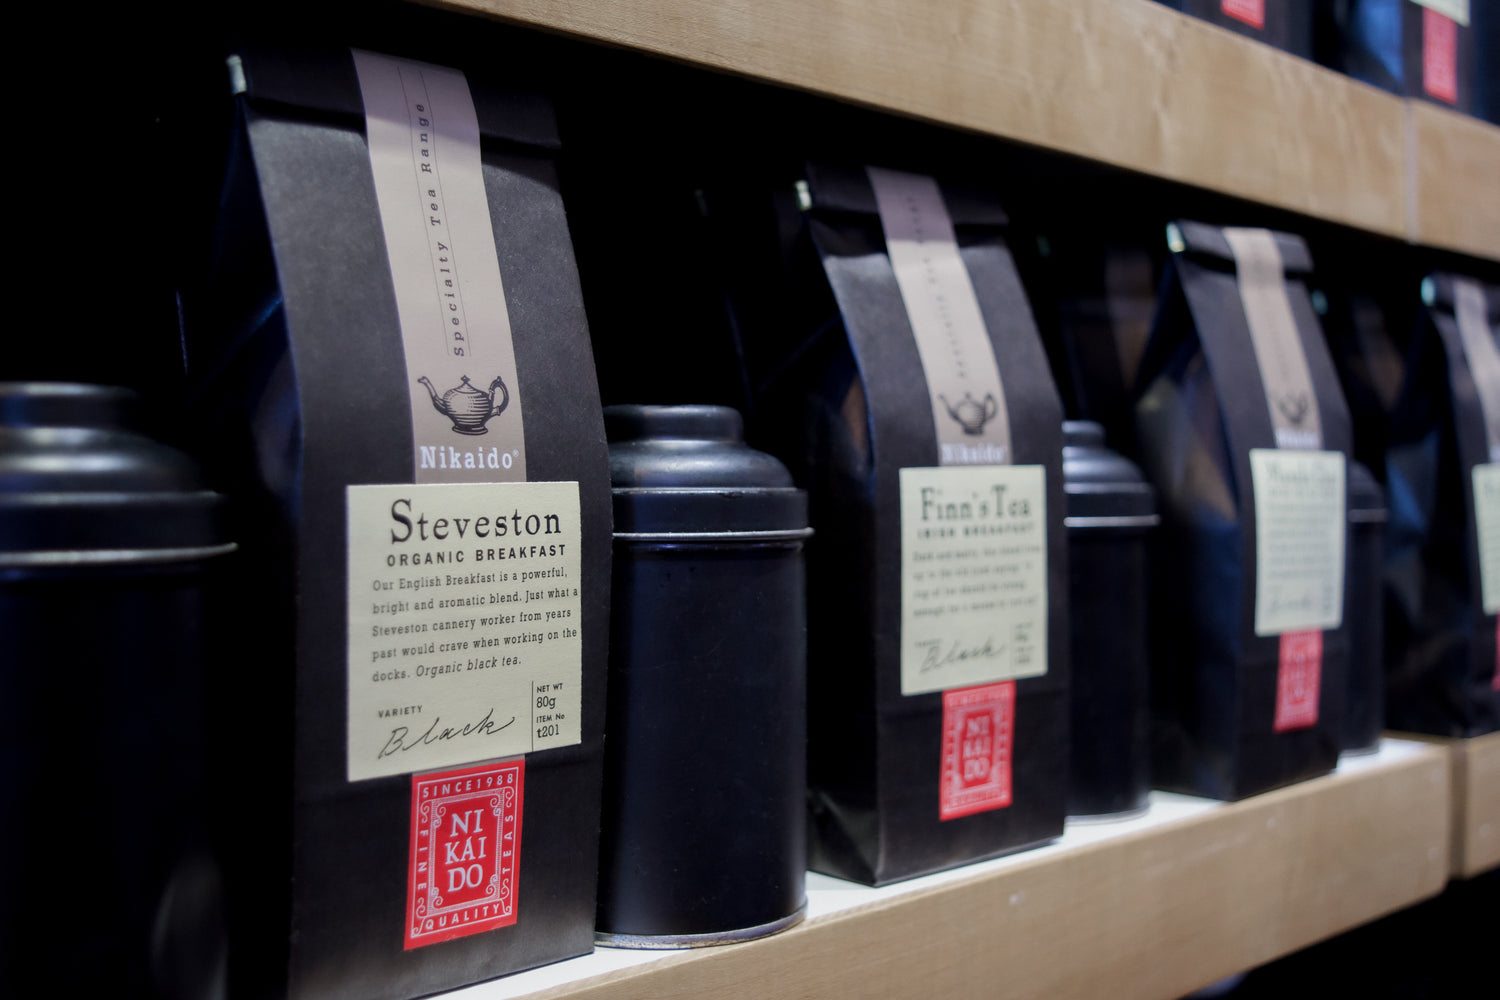 Nikaido Tea packaging - Steveston Tea